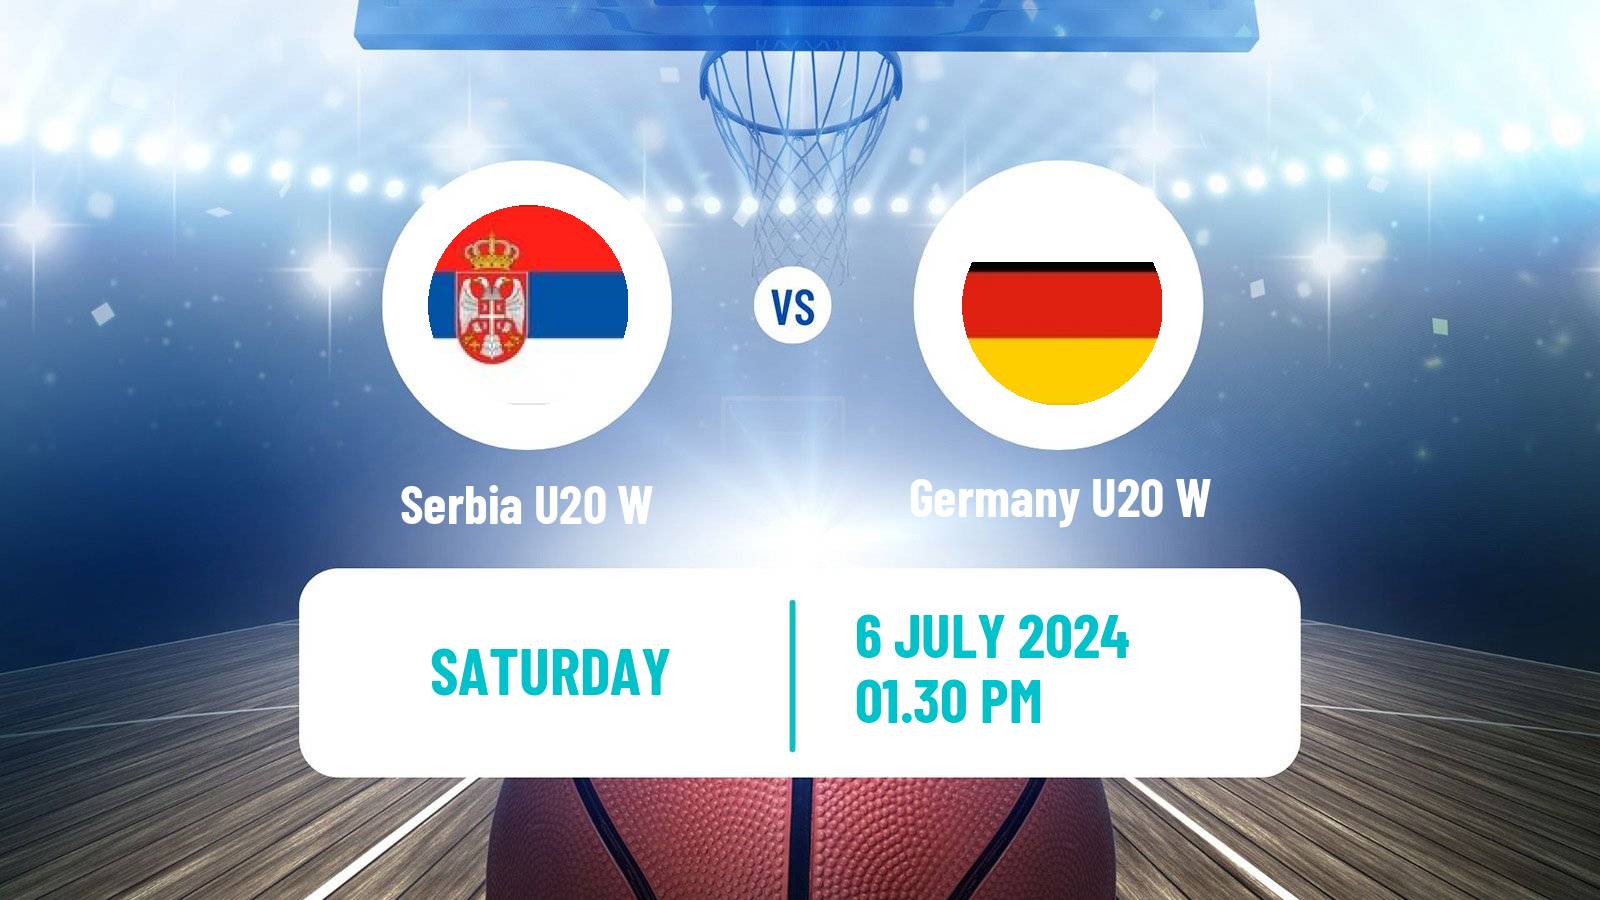 Basketball European Championship U20 Basketball Women Serbia U20 W - Germany U20 W